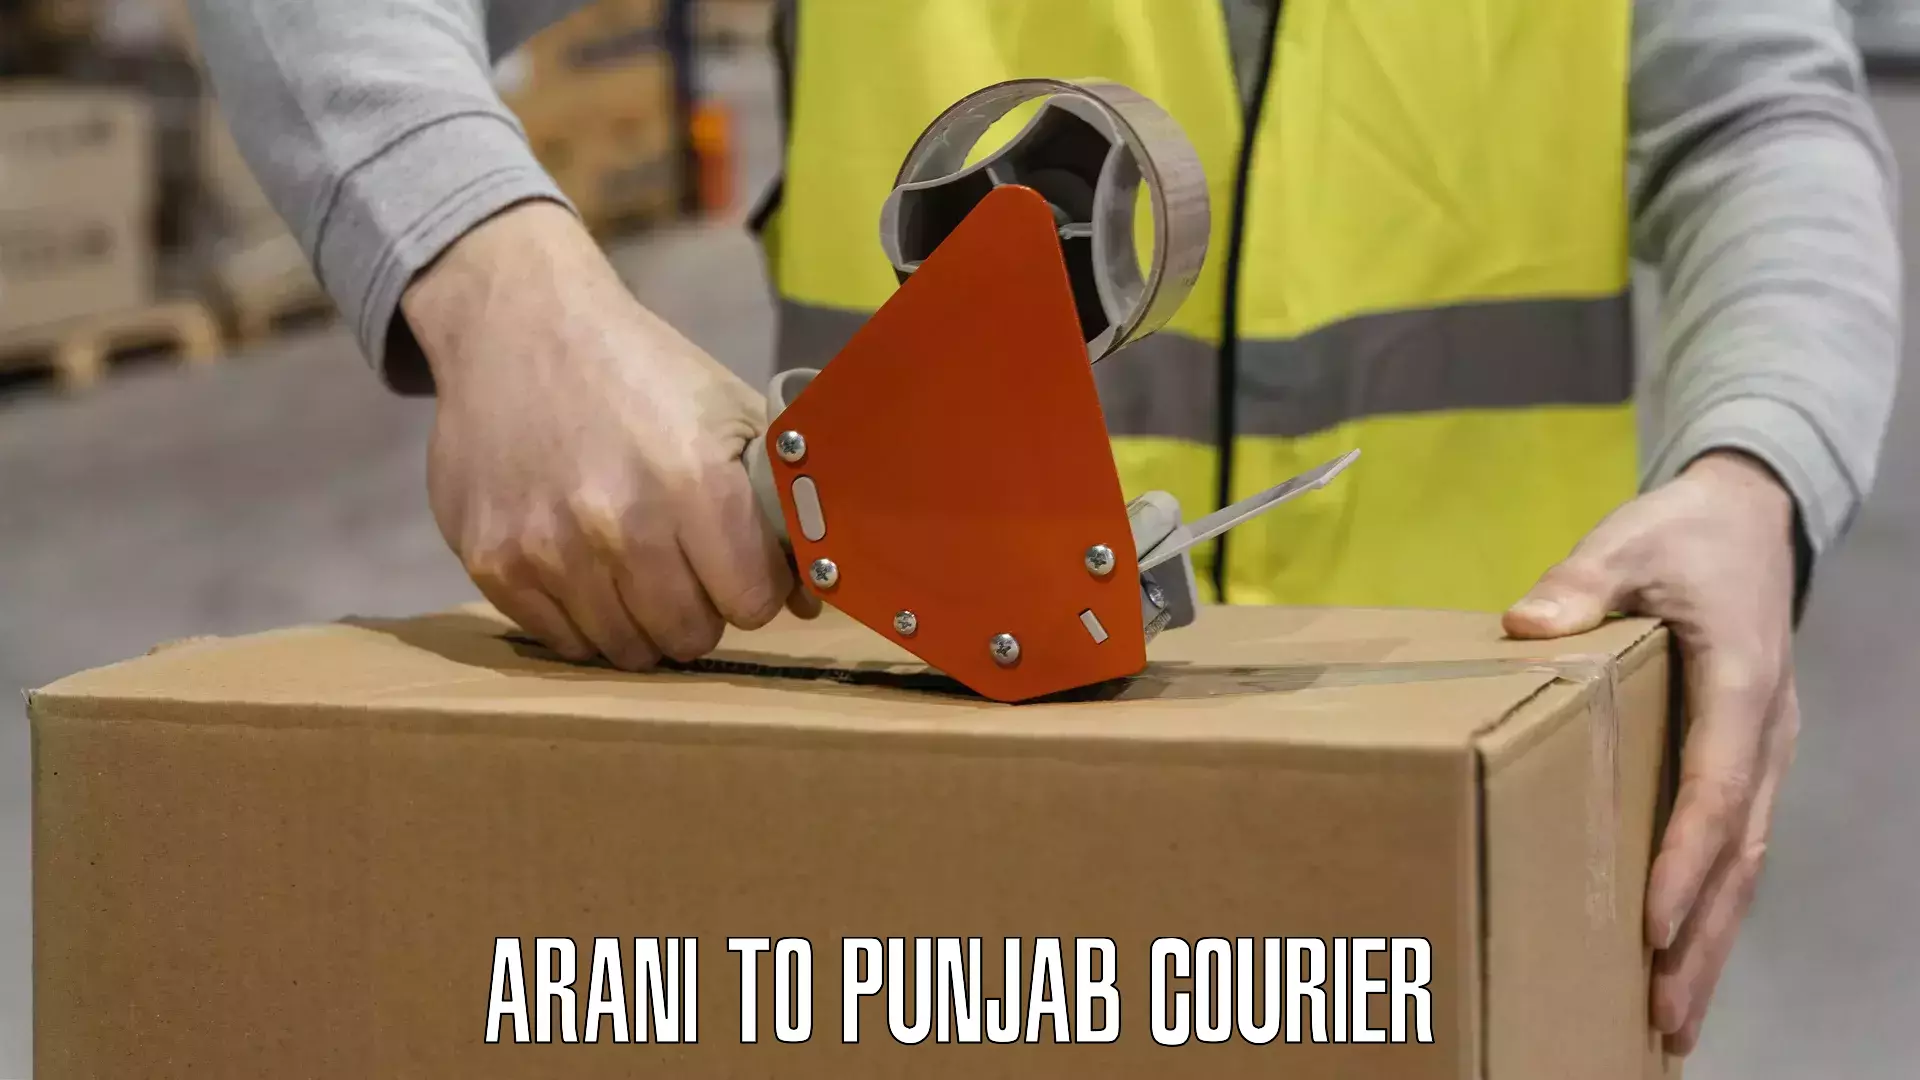 Courier service comparison in Arani to Abohar